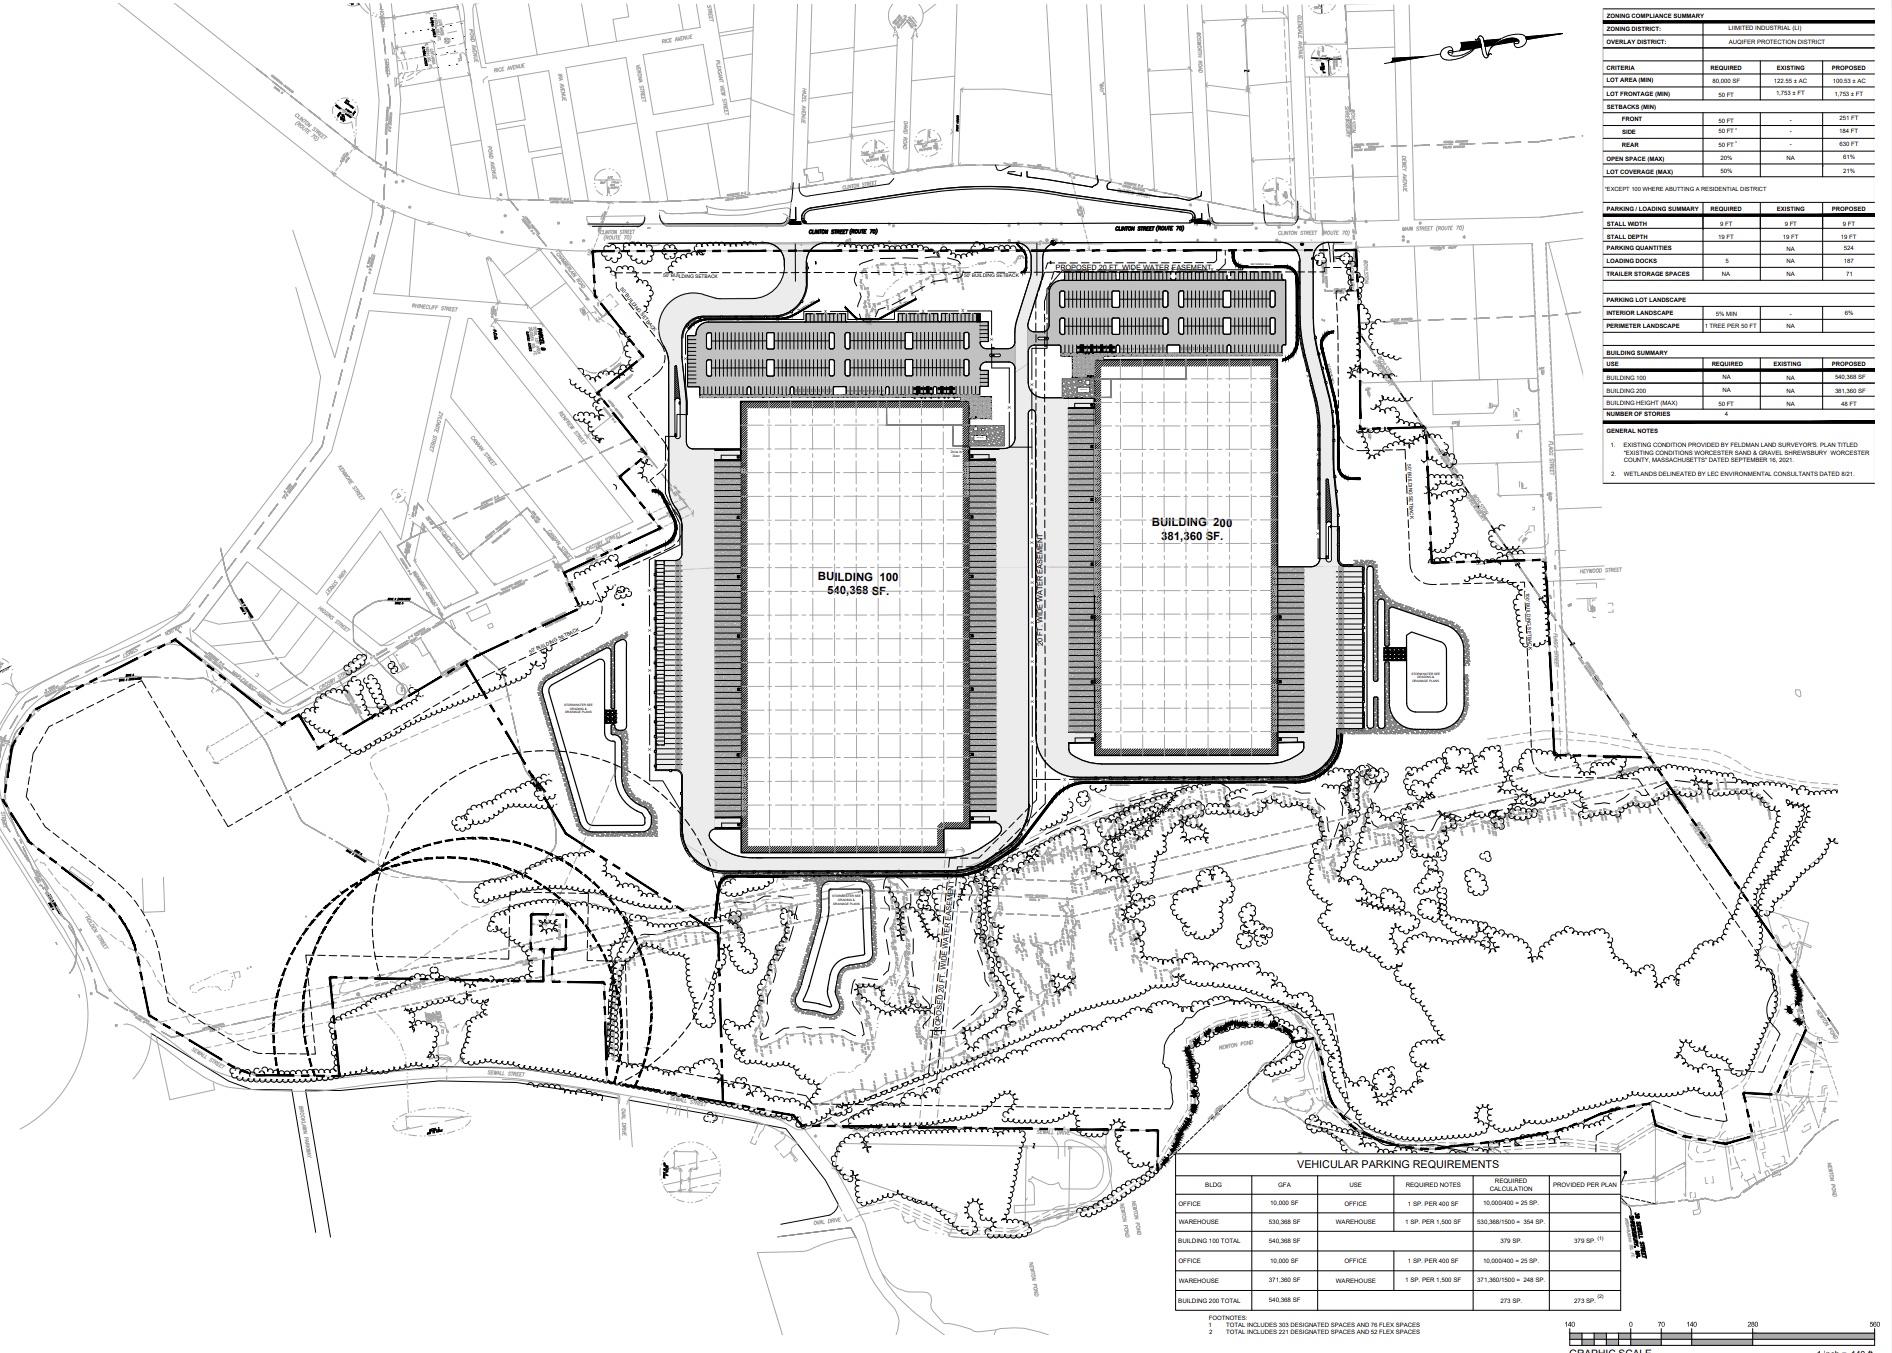 Shrewsbury Planning Board hears Clinton St. industrial park proposal